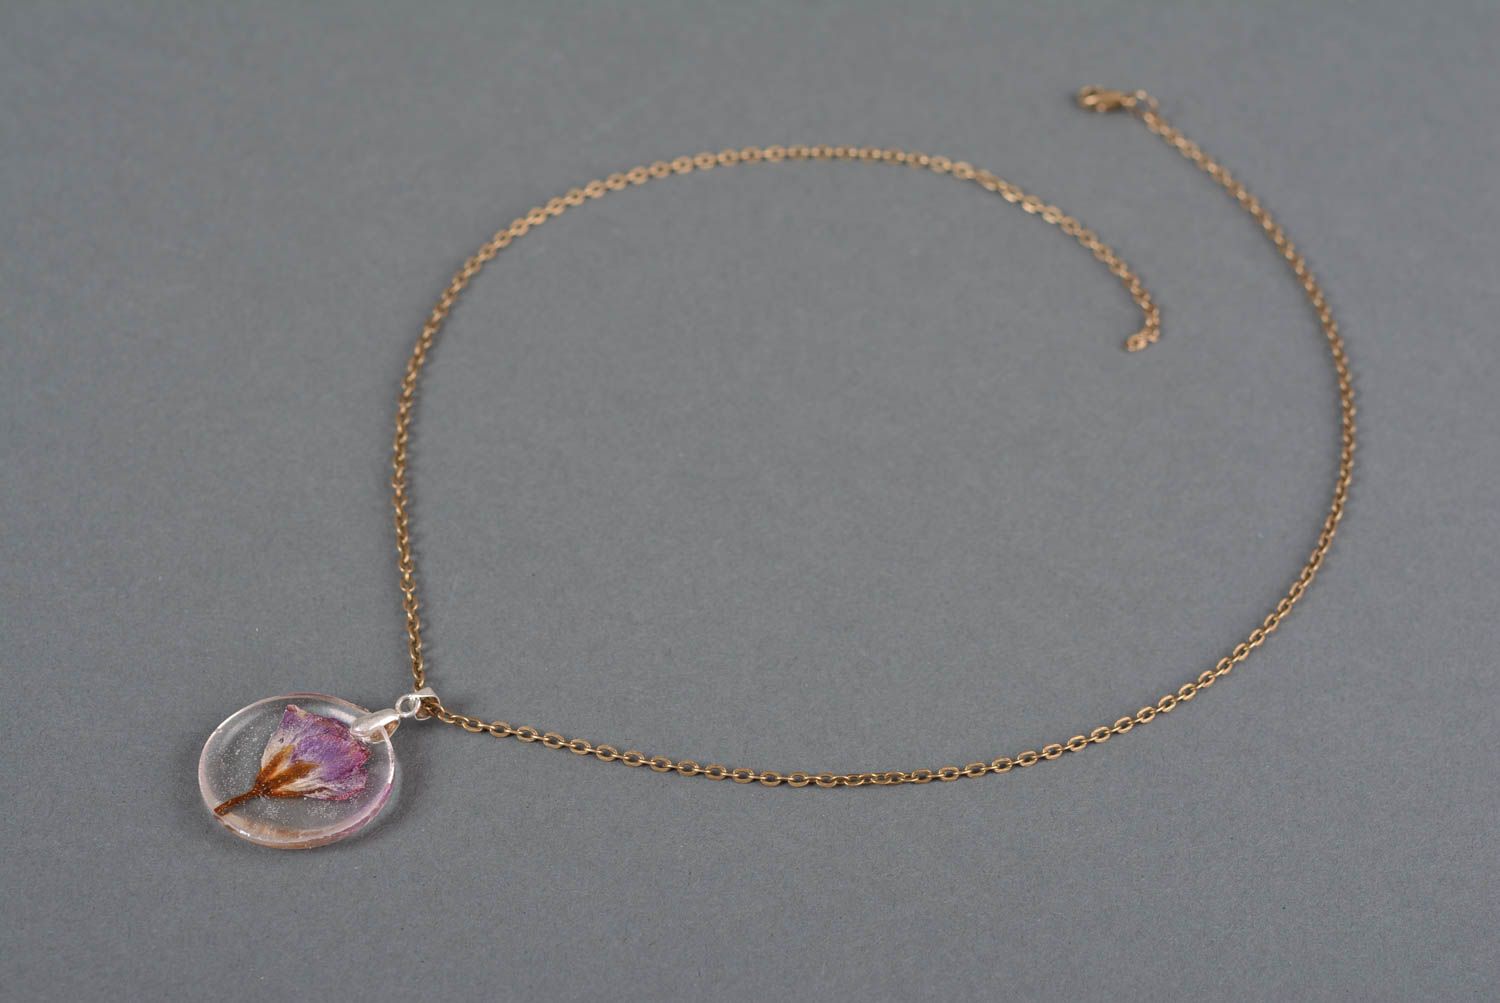 Handmade flower necklace epoxy resin charm necklace fashion jewelry gift ideas photo 3